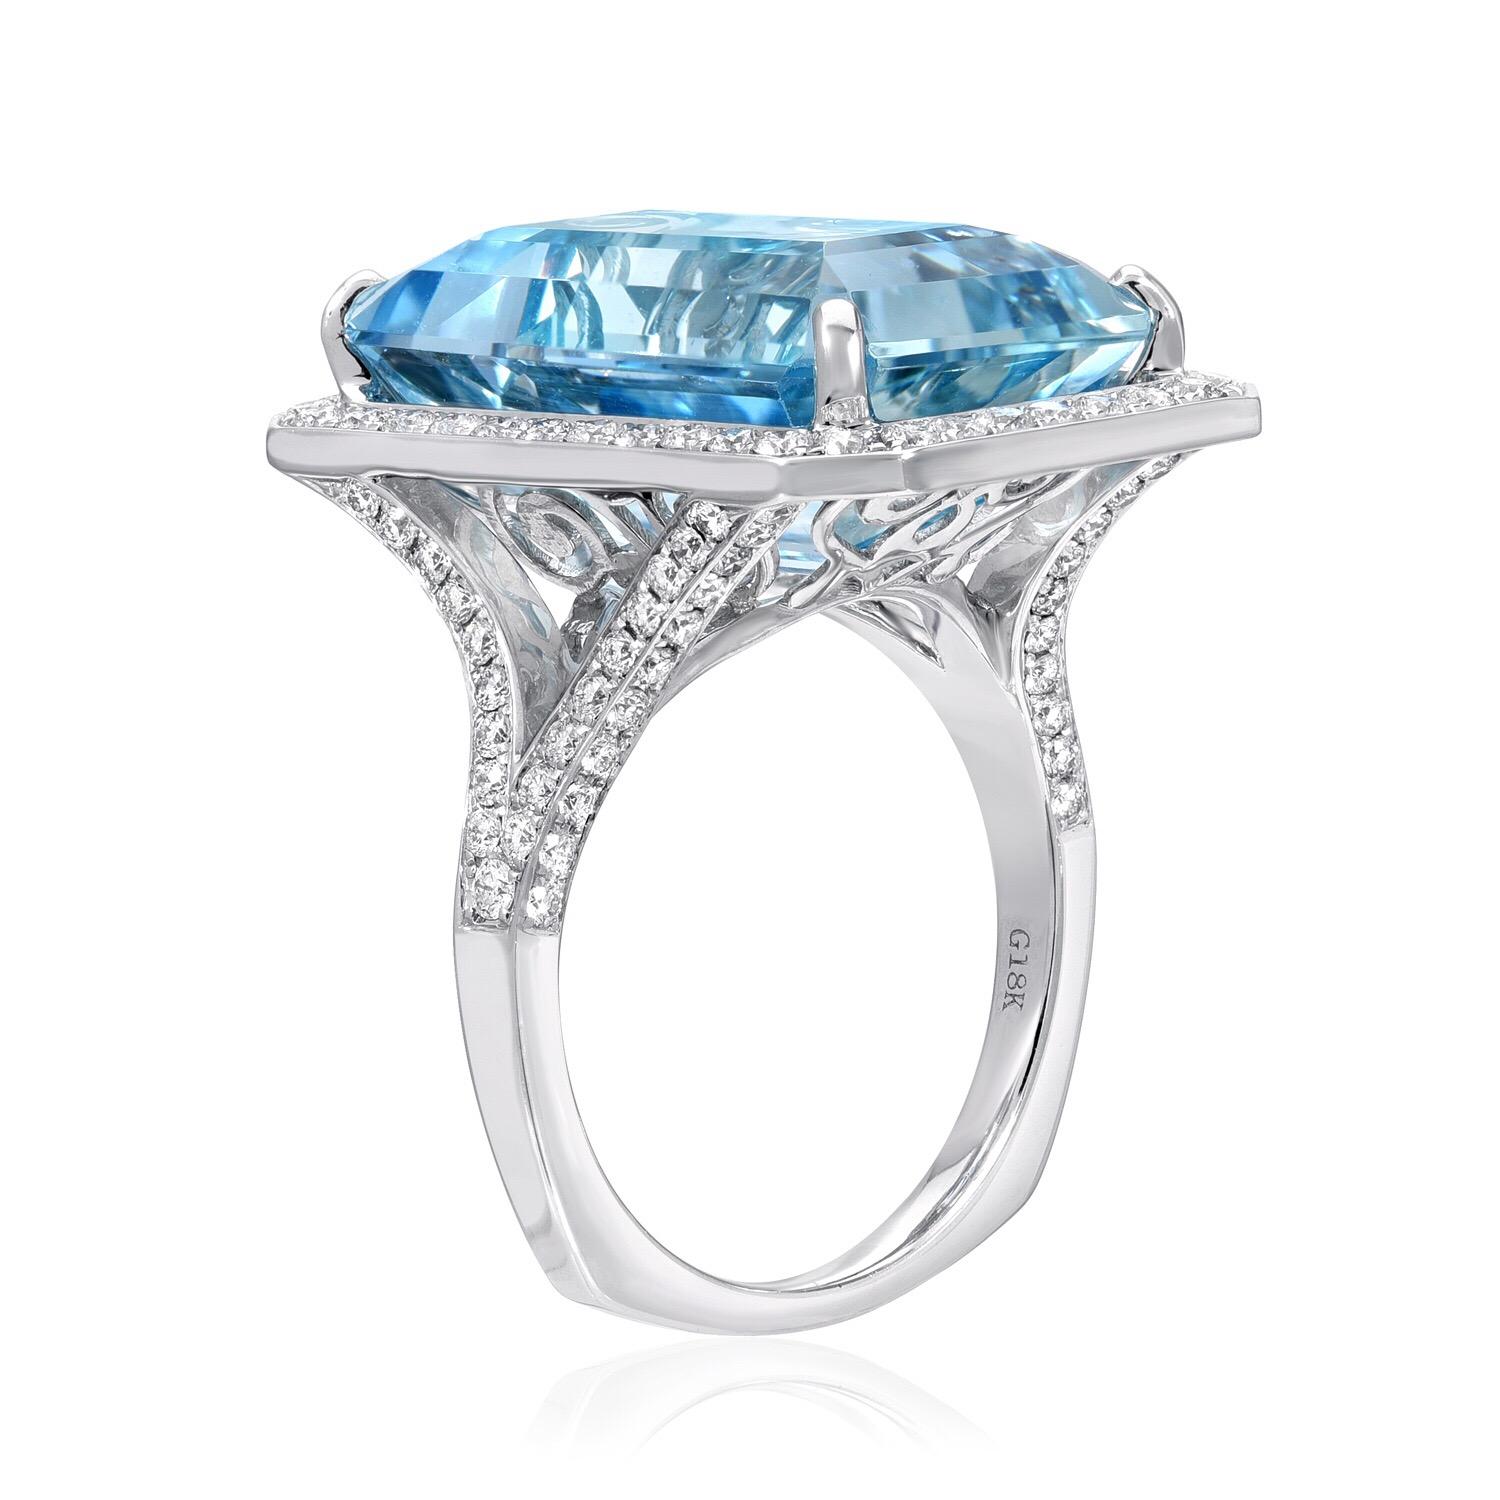 15 carat emerald cut diamond ring